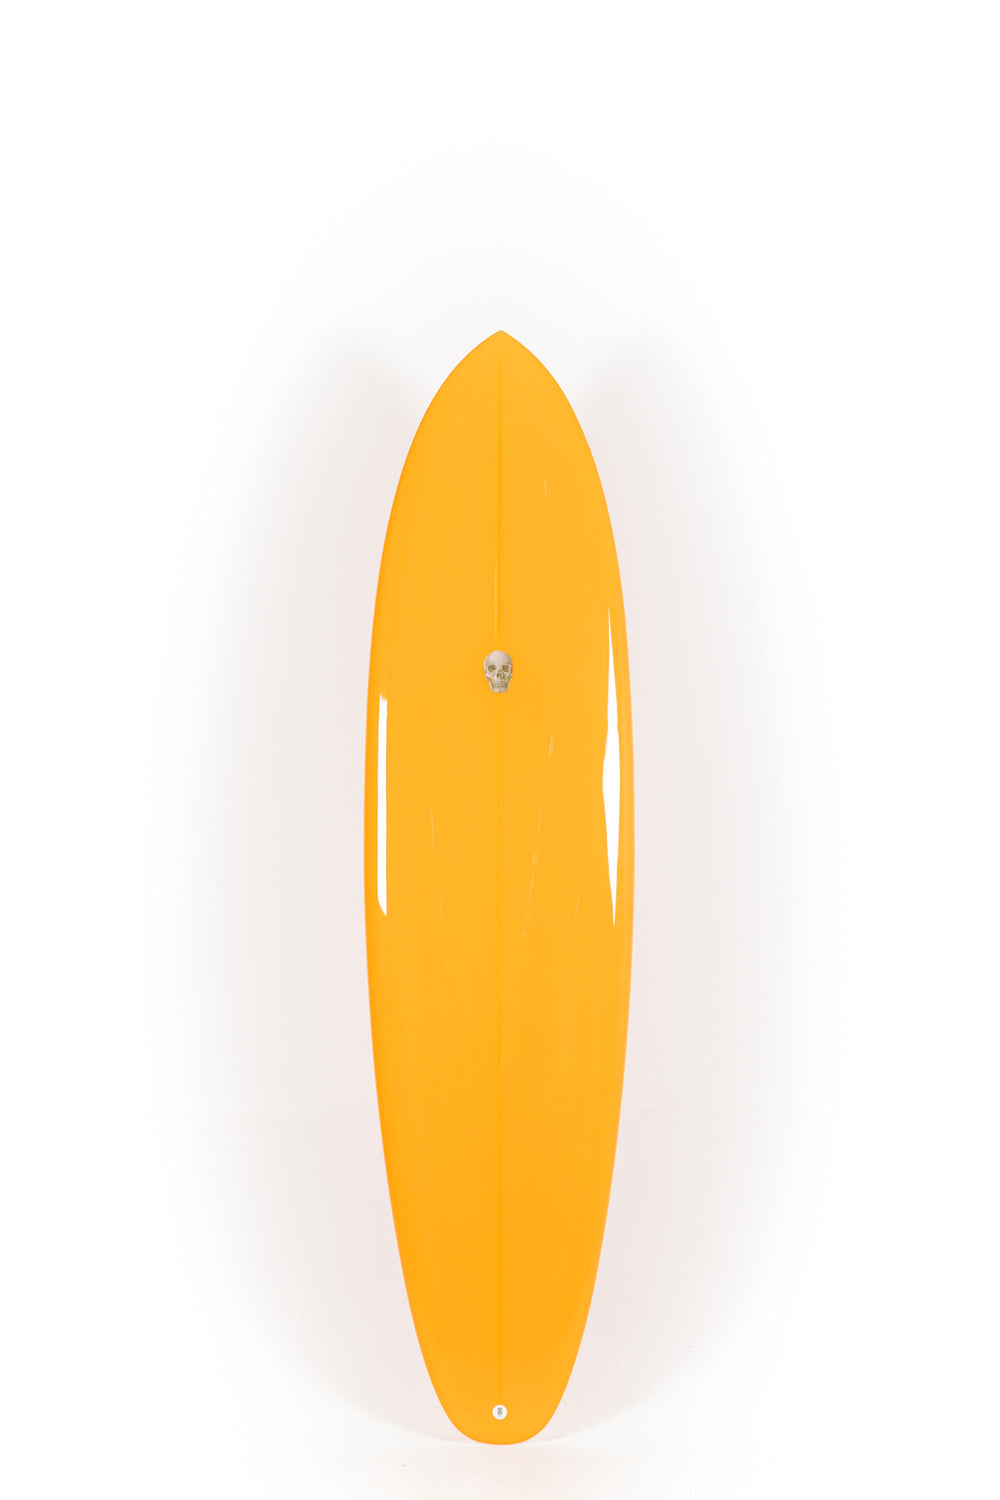 Pukas Surf Shop - Christenson Surfboards - TWIN TRACKER - 7'2